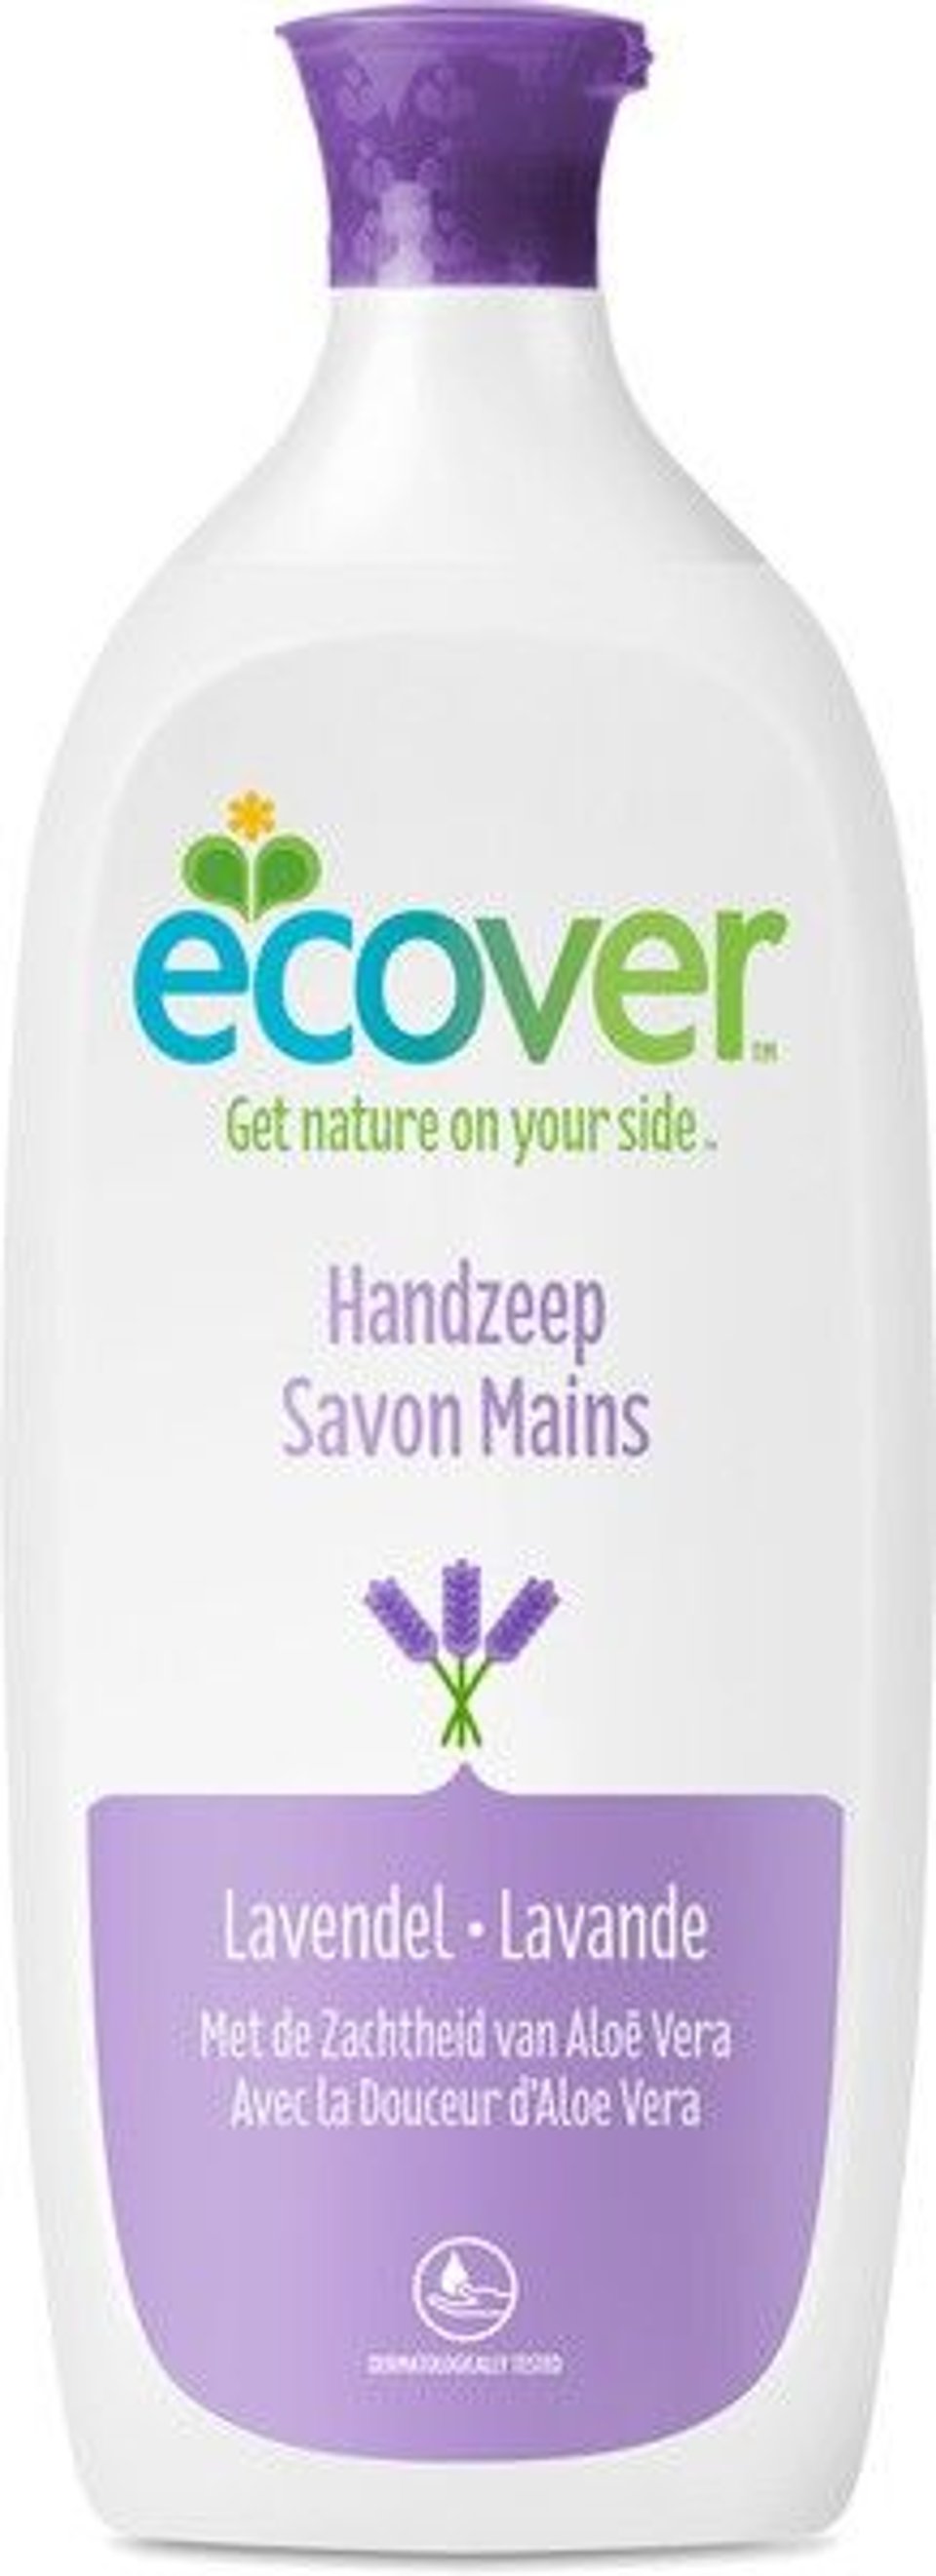 Ecover Handzeep Lavendel-Aloe Vera 1 Liter